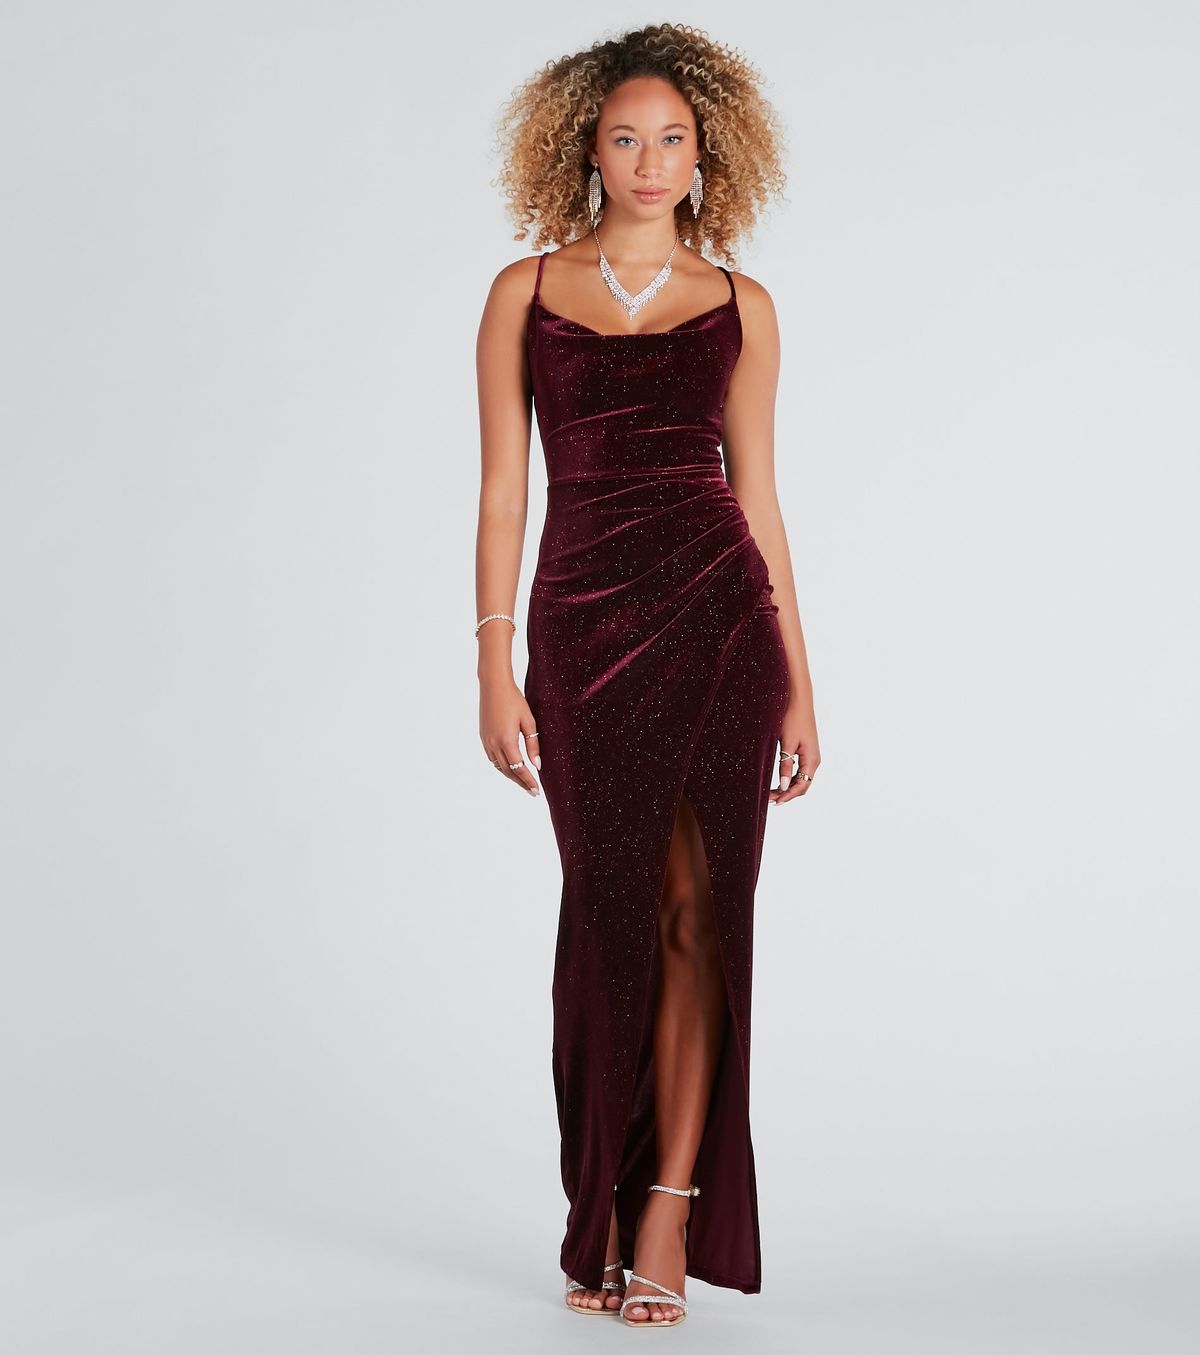 Windsor Alejandra Formal Satin Lace Corset Dress